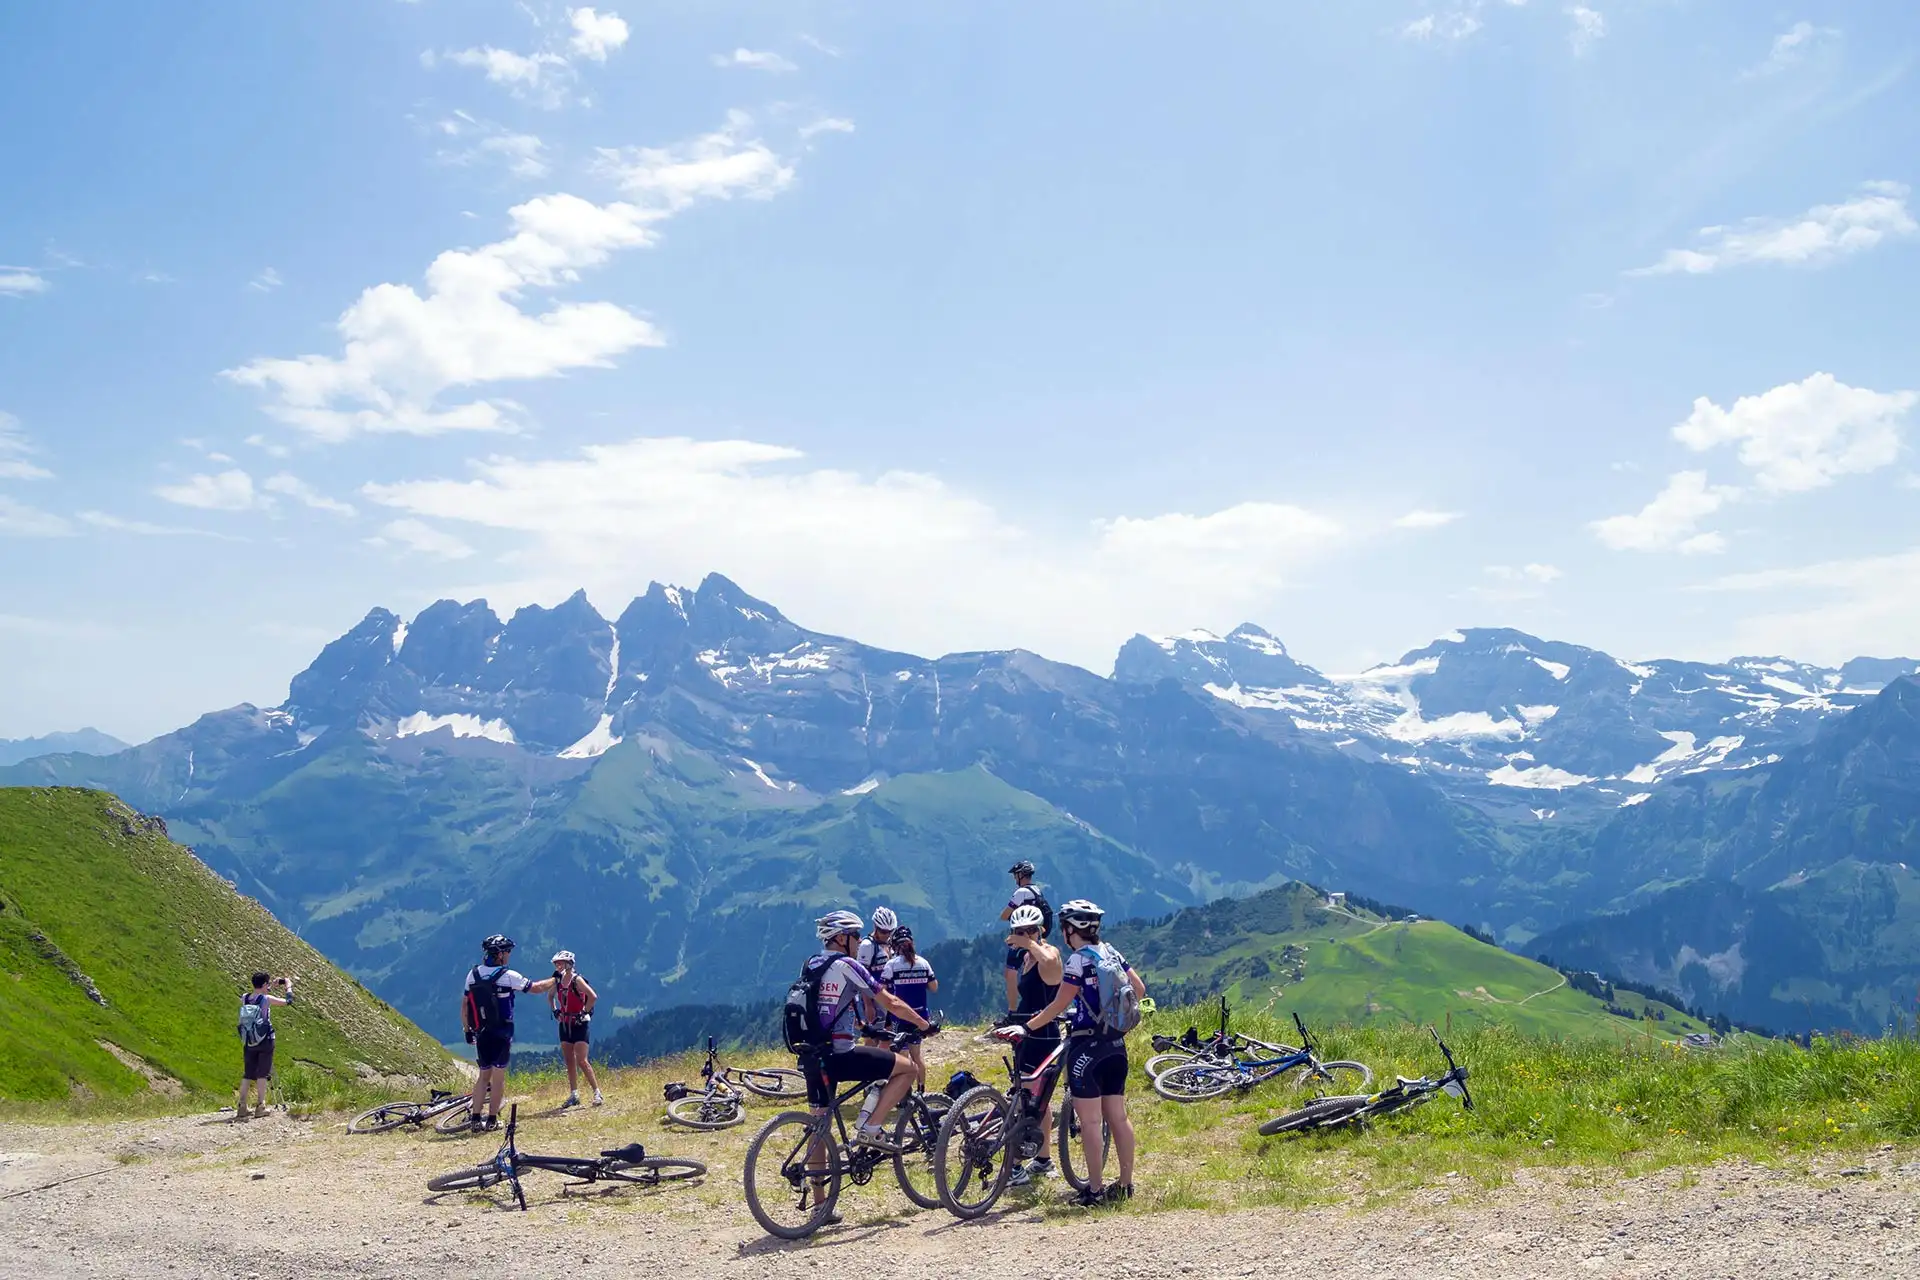 Bikers in Swiss Alps, Portes du Soleil Region; Photo Courtesy of ELEPHOTOS/Shutterstock.com